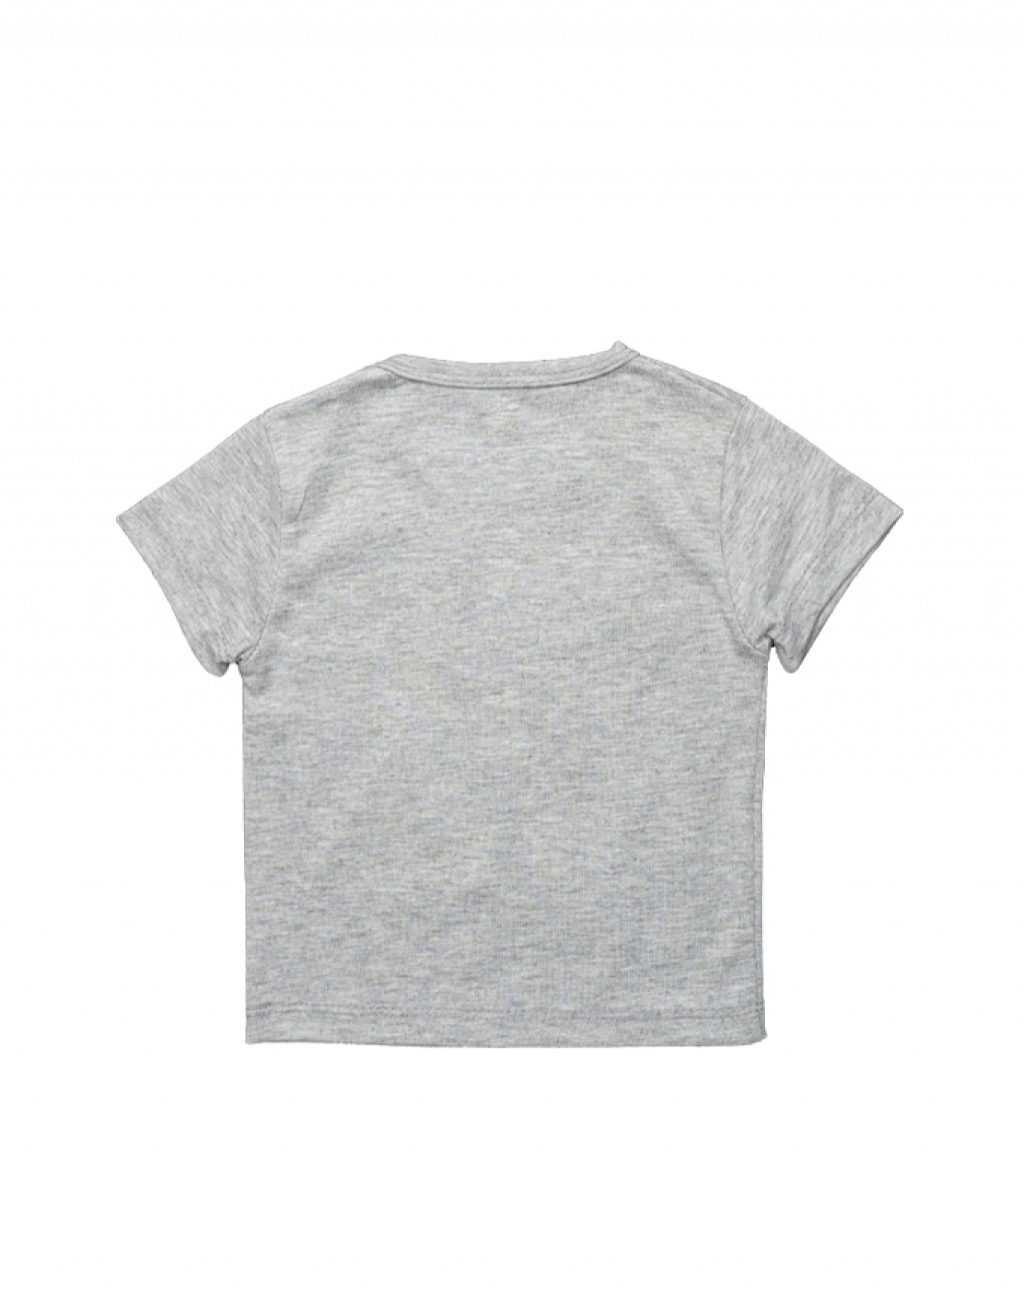 Buy AllureP T-shirt H-S Grey Sunshine in Pakistan | online shopping in ...